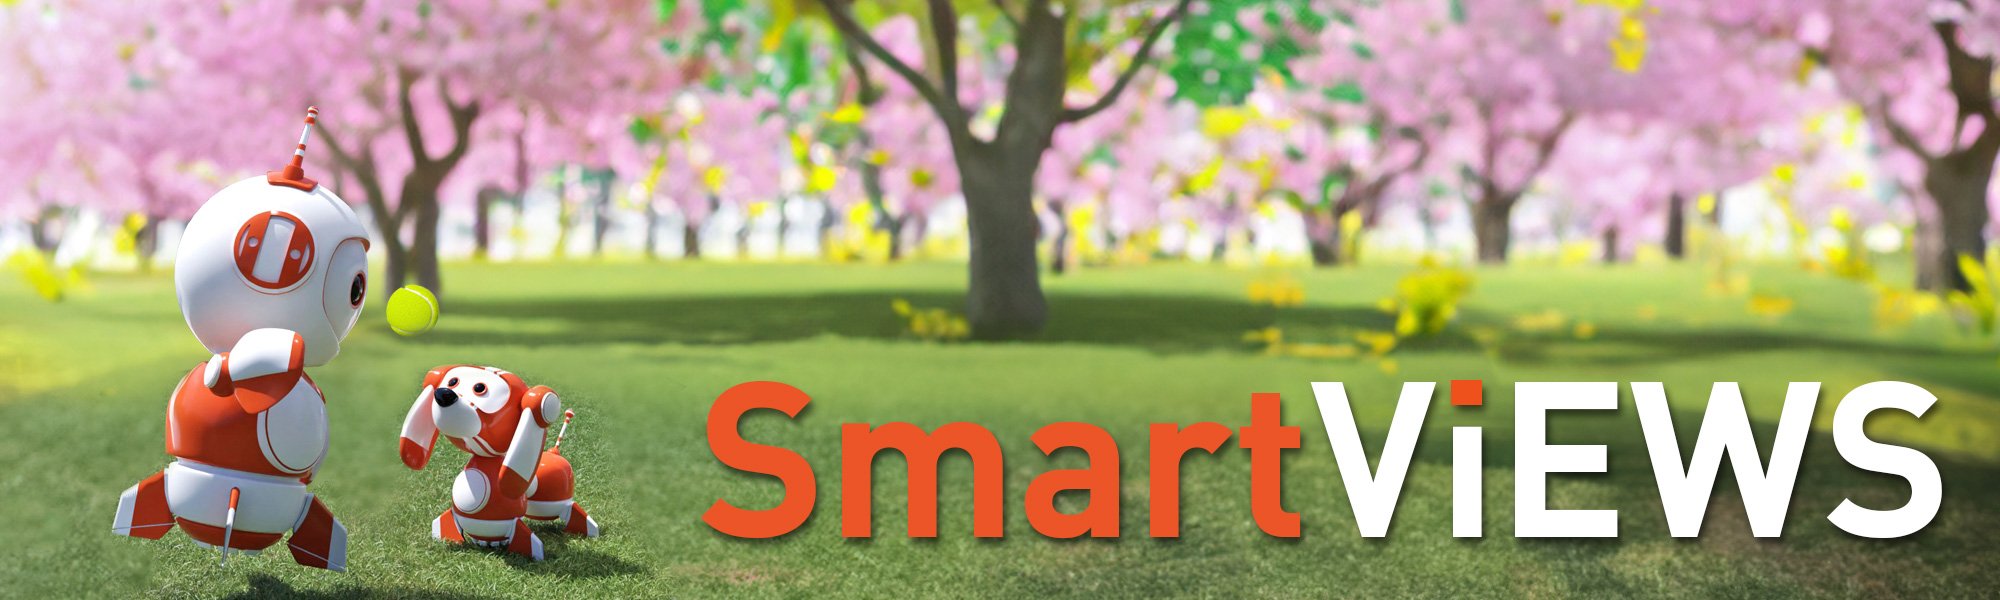 Smart_Views_Spring_600x2000